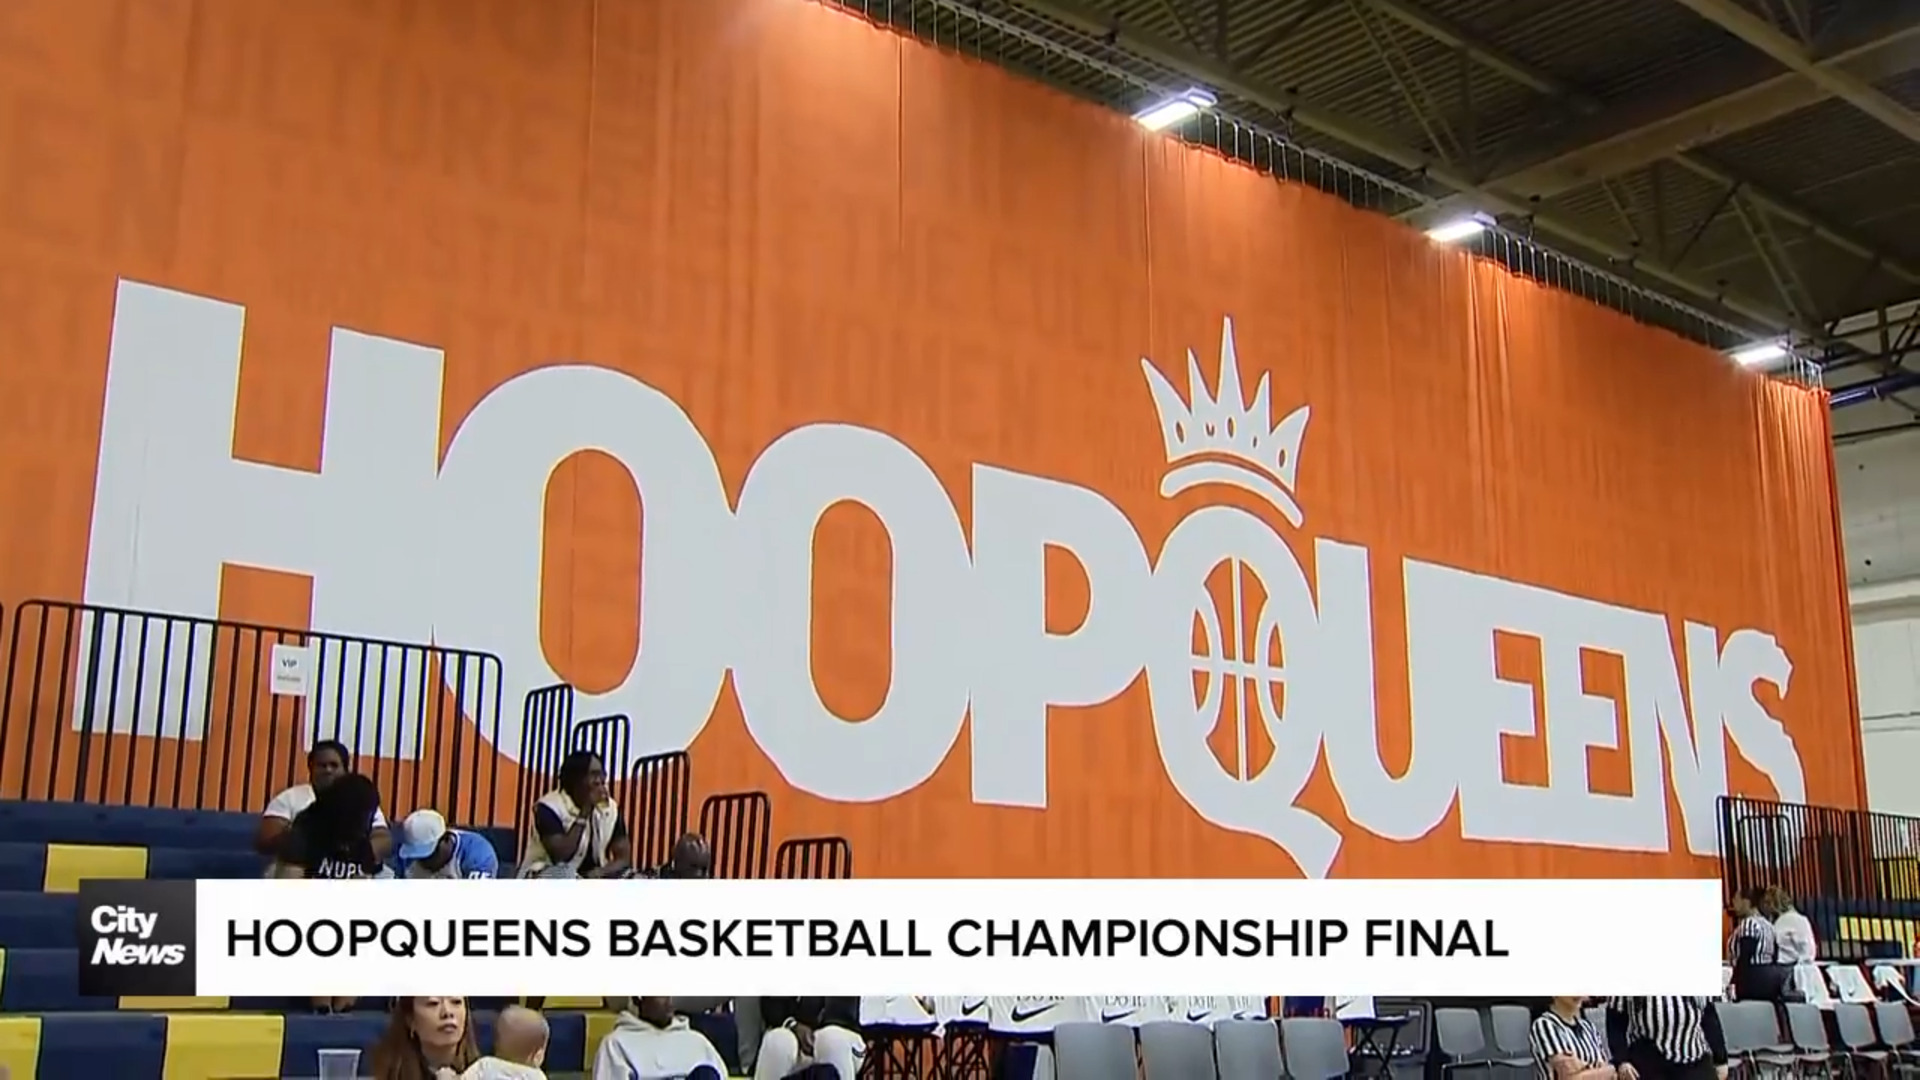 Hoopqueens women's basketball league marks historic season